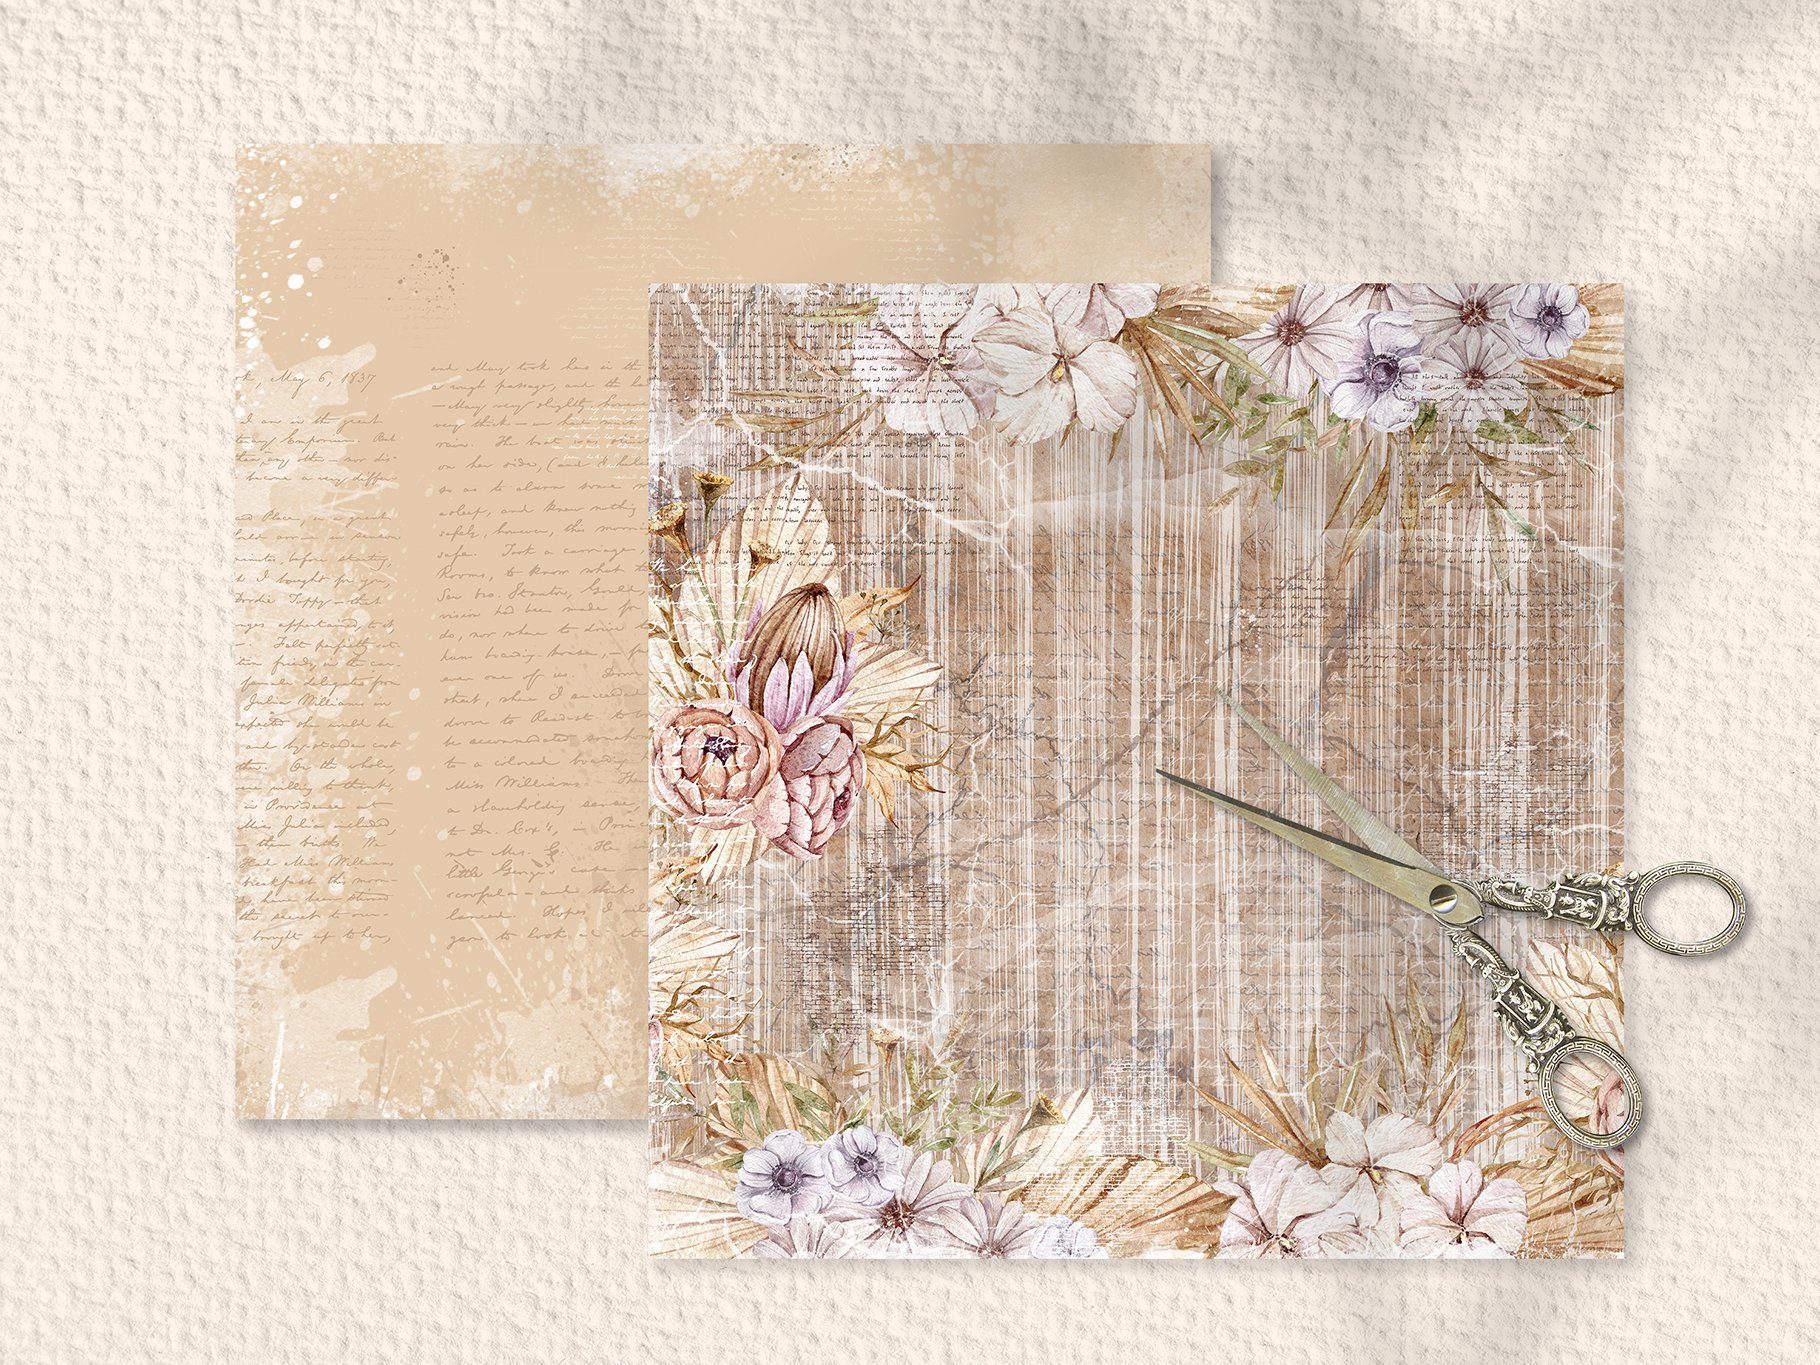 SOOBE 12 Sheet Vintage Scrapbooking Paper,Floral Pattern